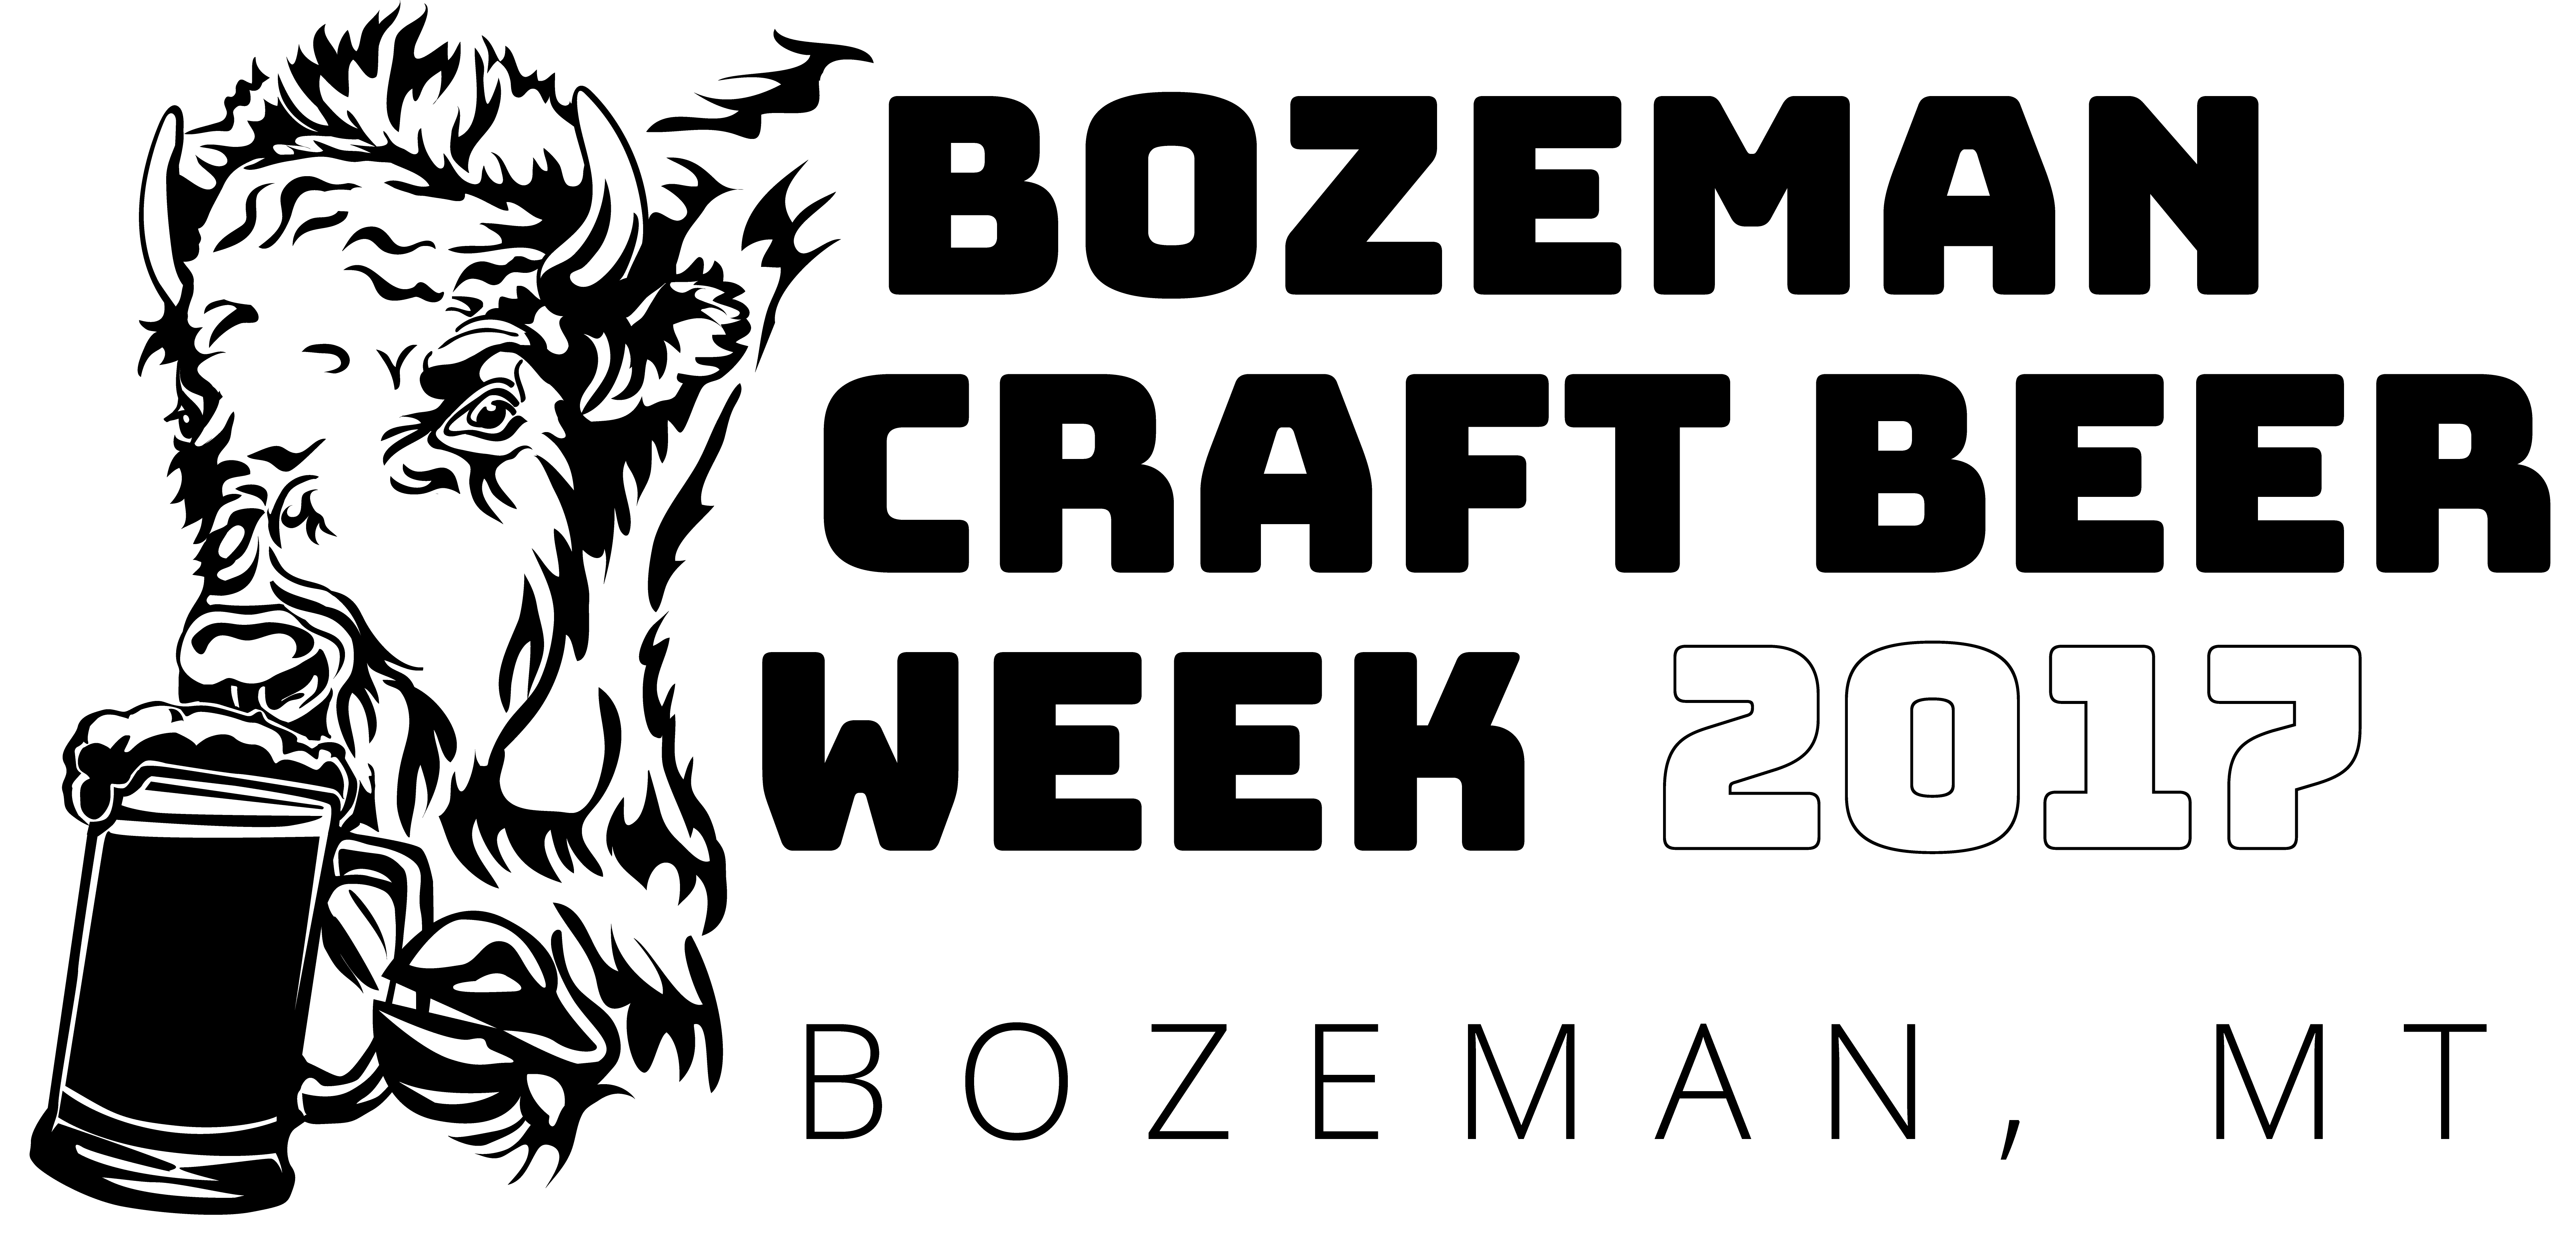 Inaugural Bozeman, Montana Craft Beer Week The Beer Connoisseur®